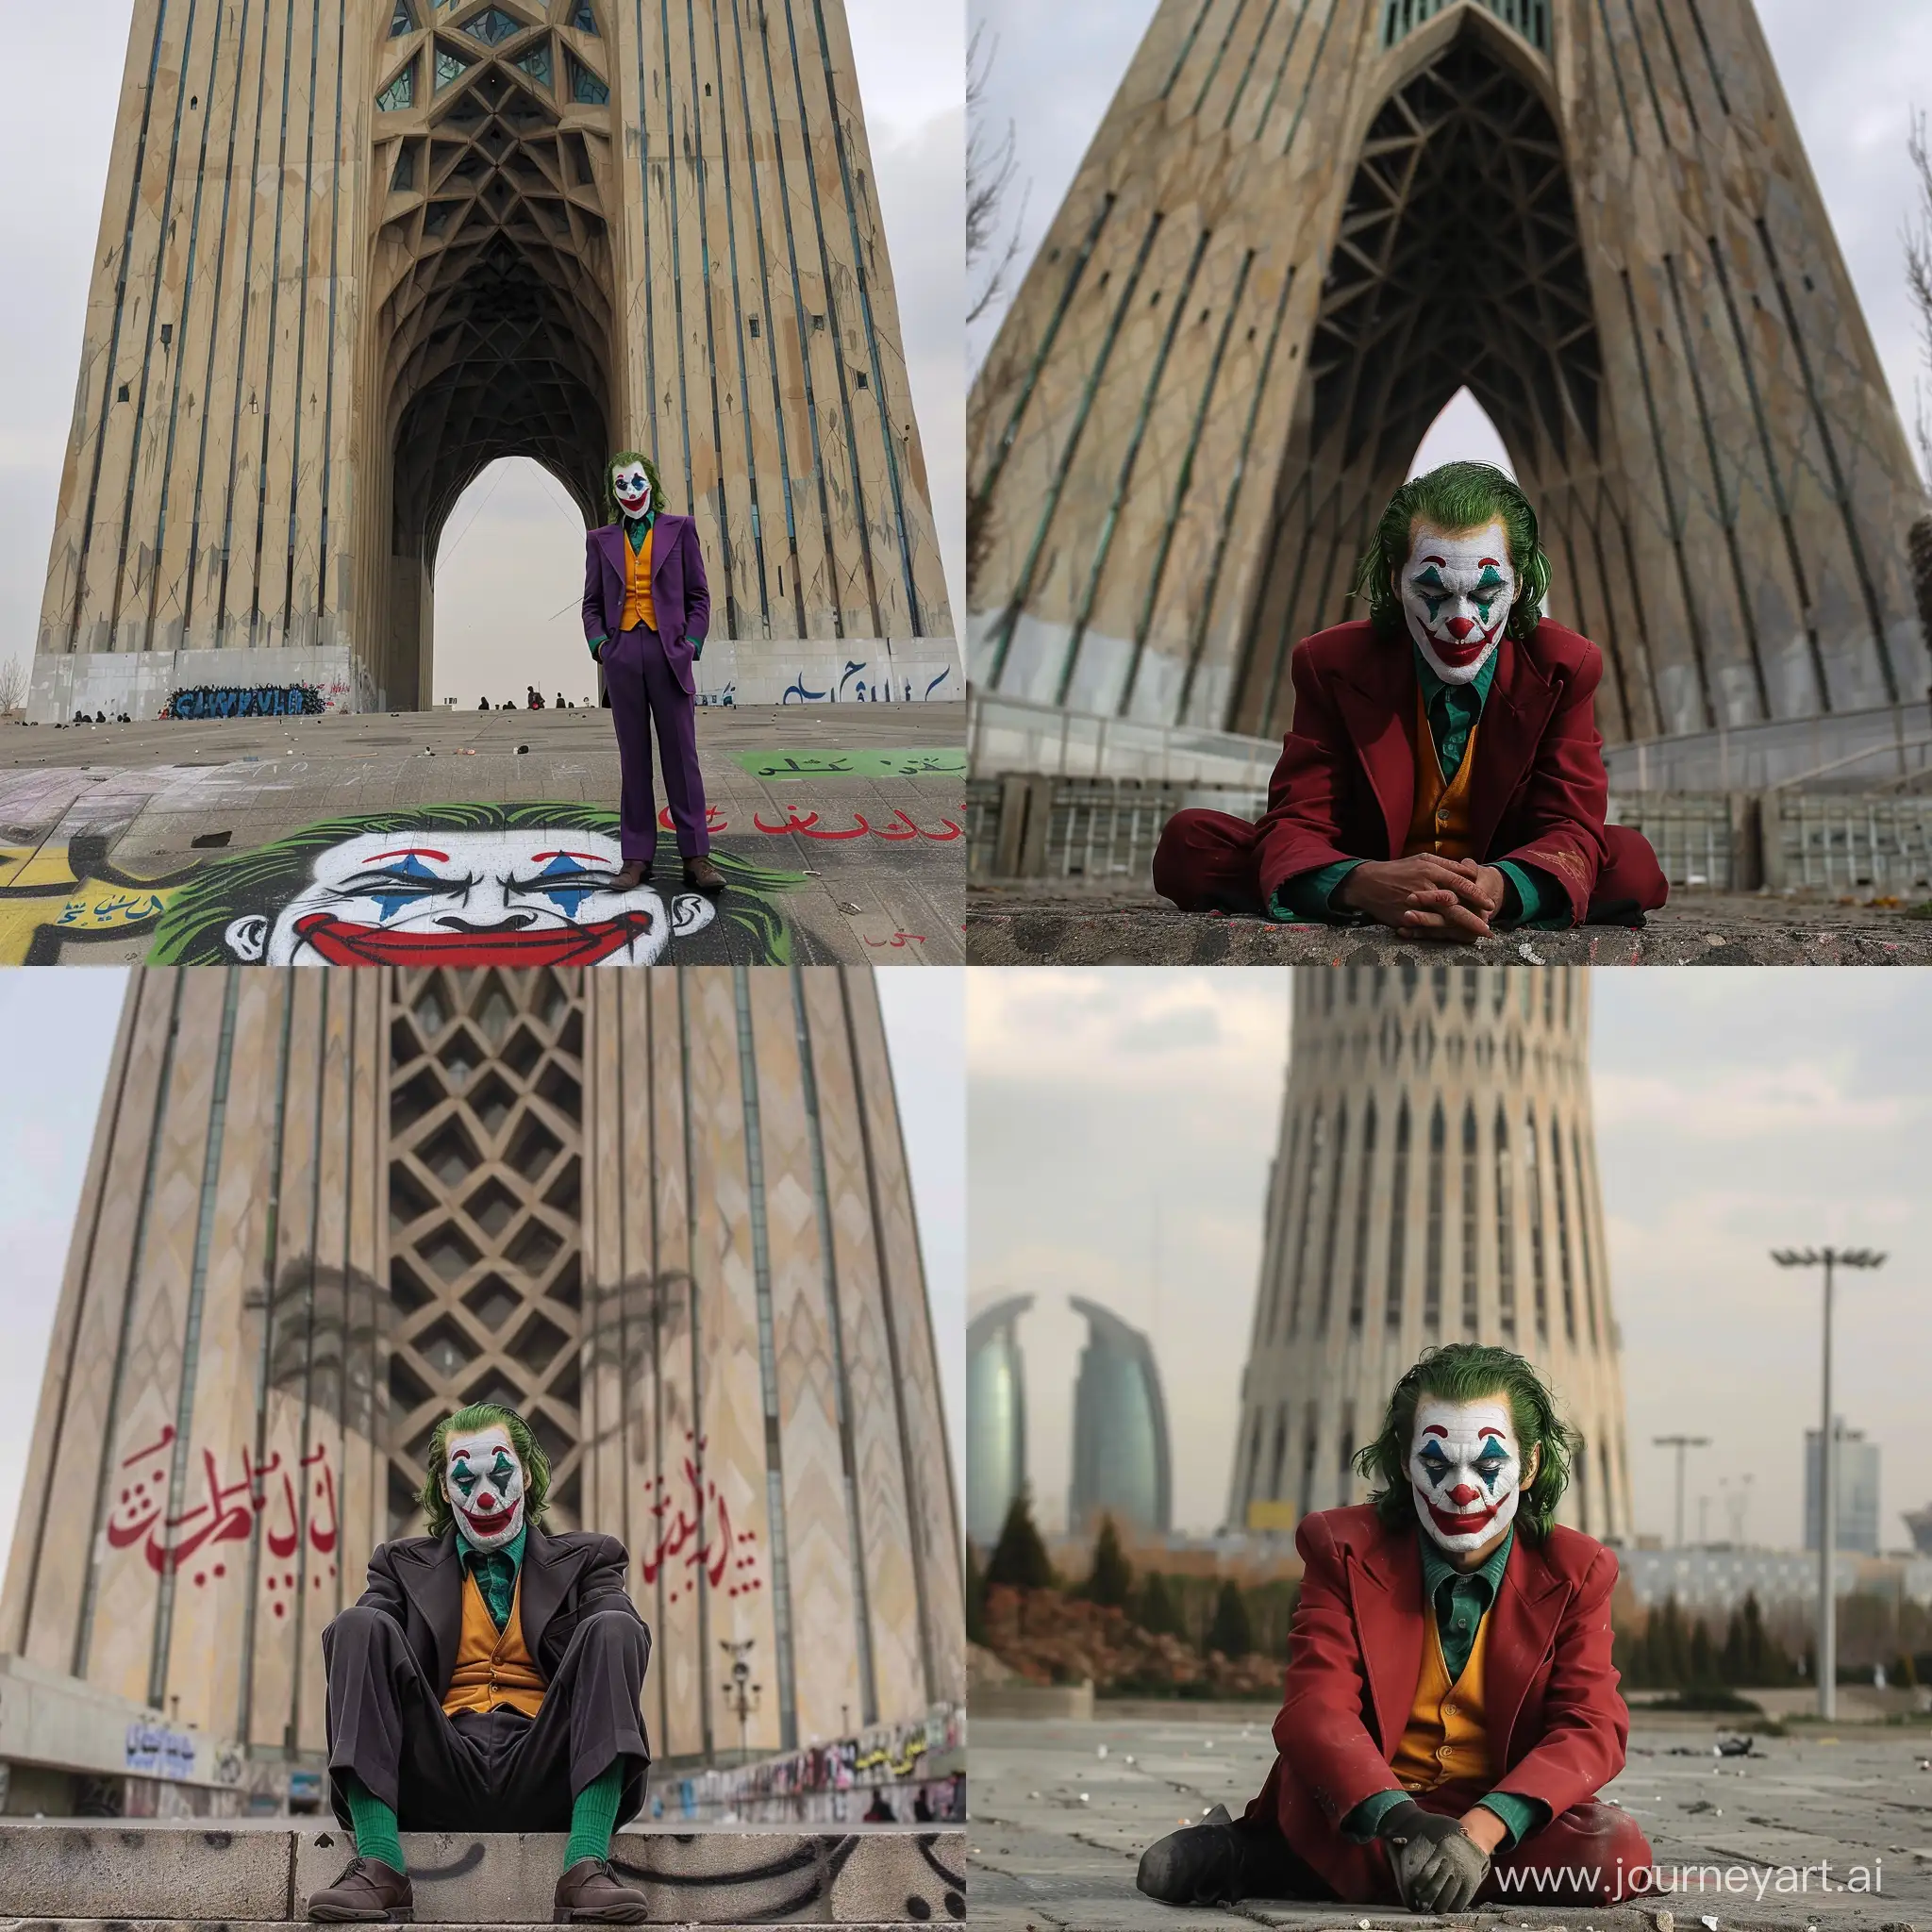 Joker-Character-Performing-Street-Art-under-Tehran-Azad-Tower